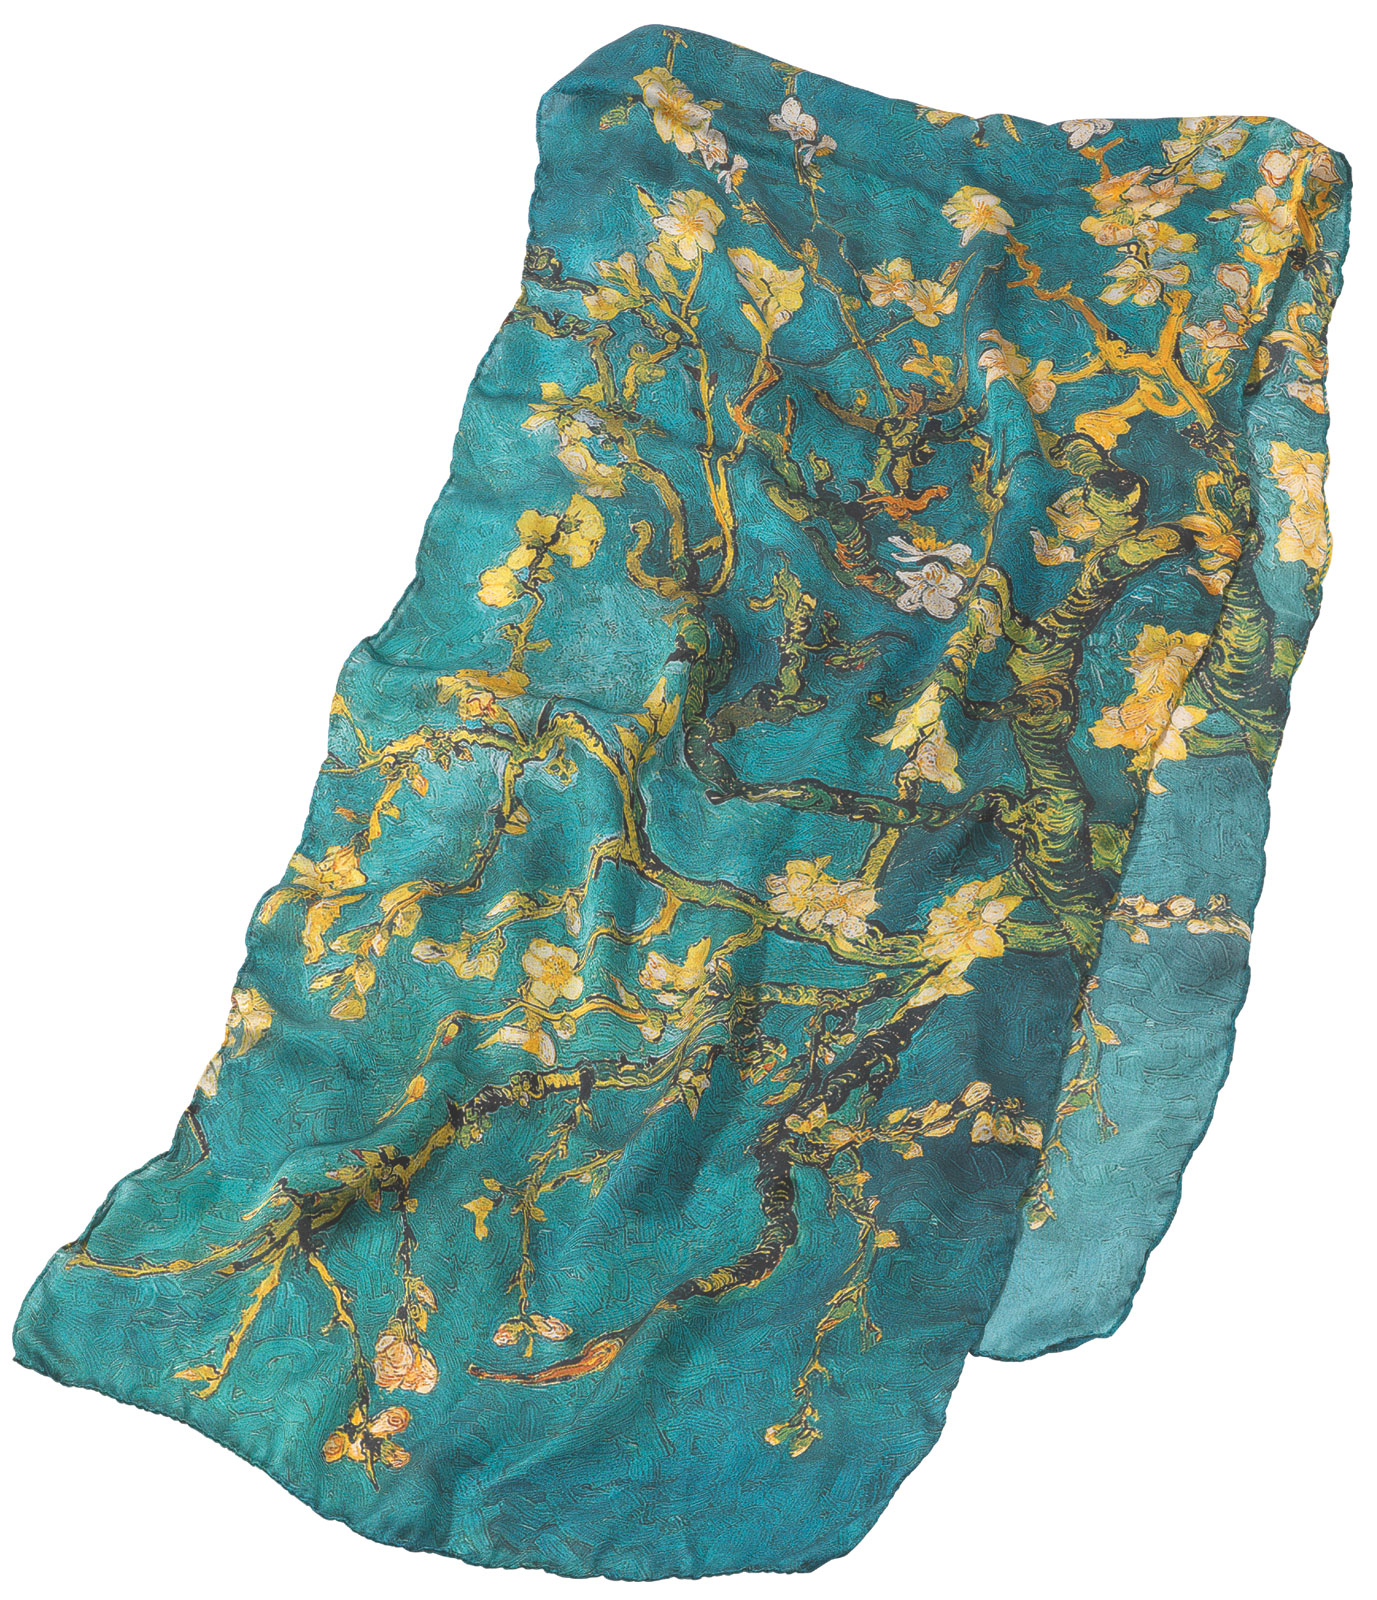 Silk scarf "Almond Blossom" (1890) by Vincent van Gogh